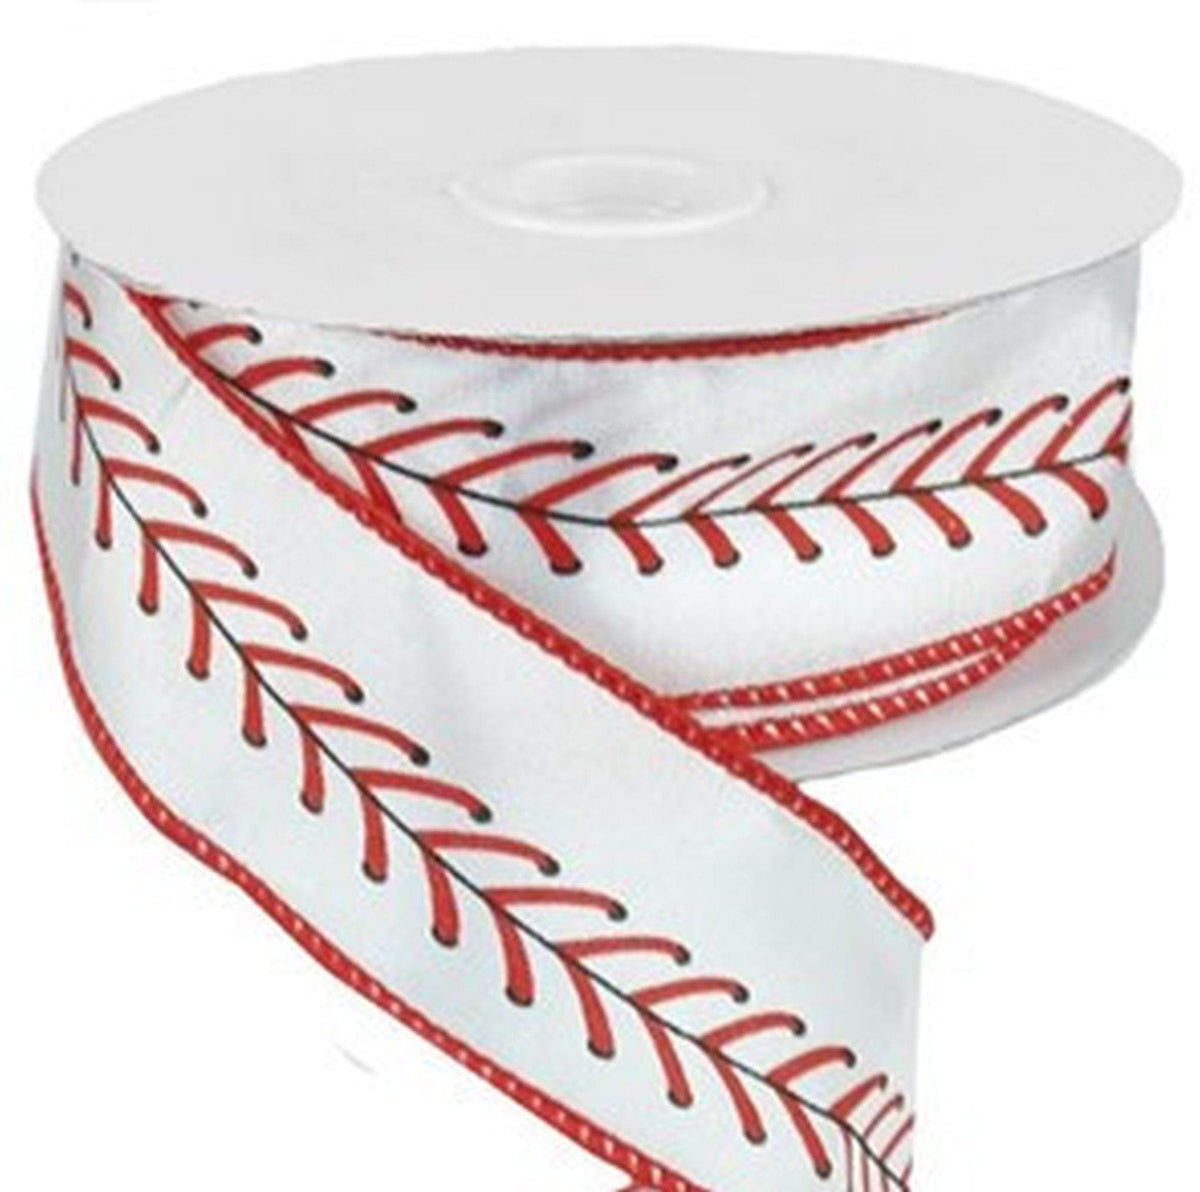 1.5 Inch White Satin Ribbon with Red & Black Baseball Stitching - 10 Yards